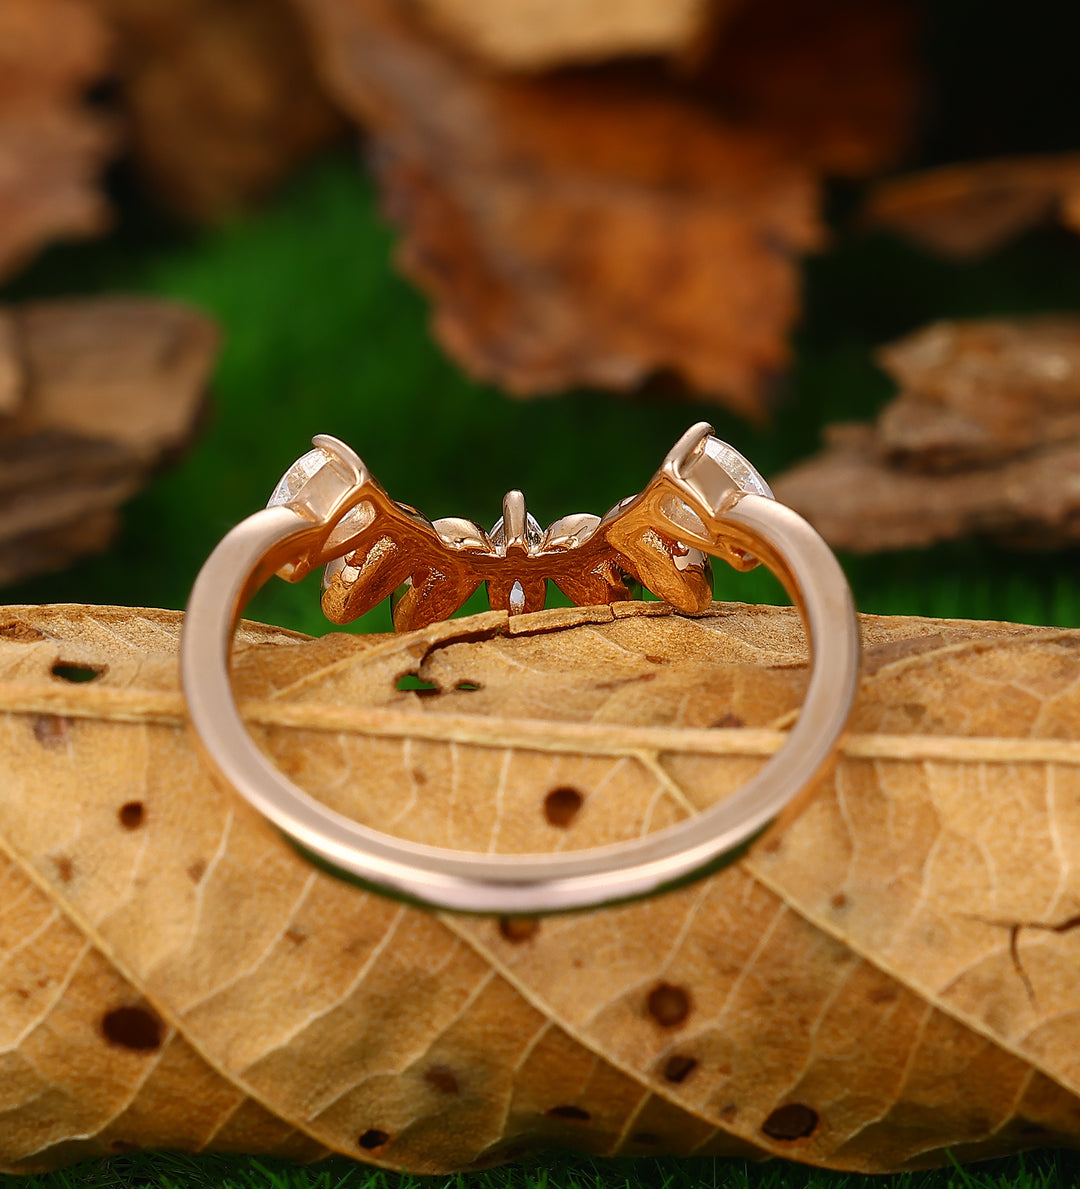 Leaf Moissanite Promise Bridal Ring Matching Band Ring